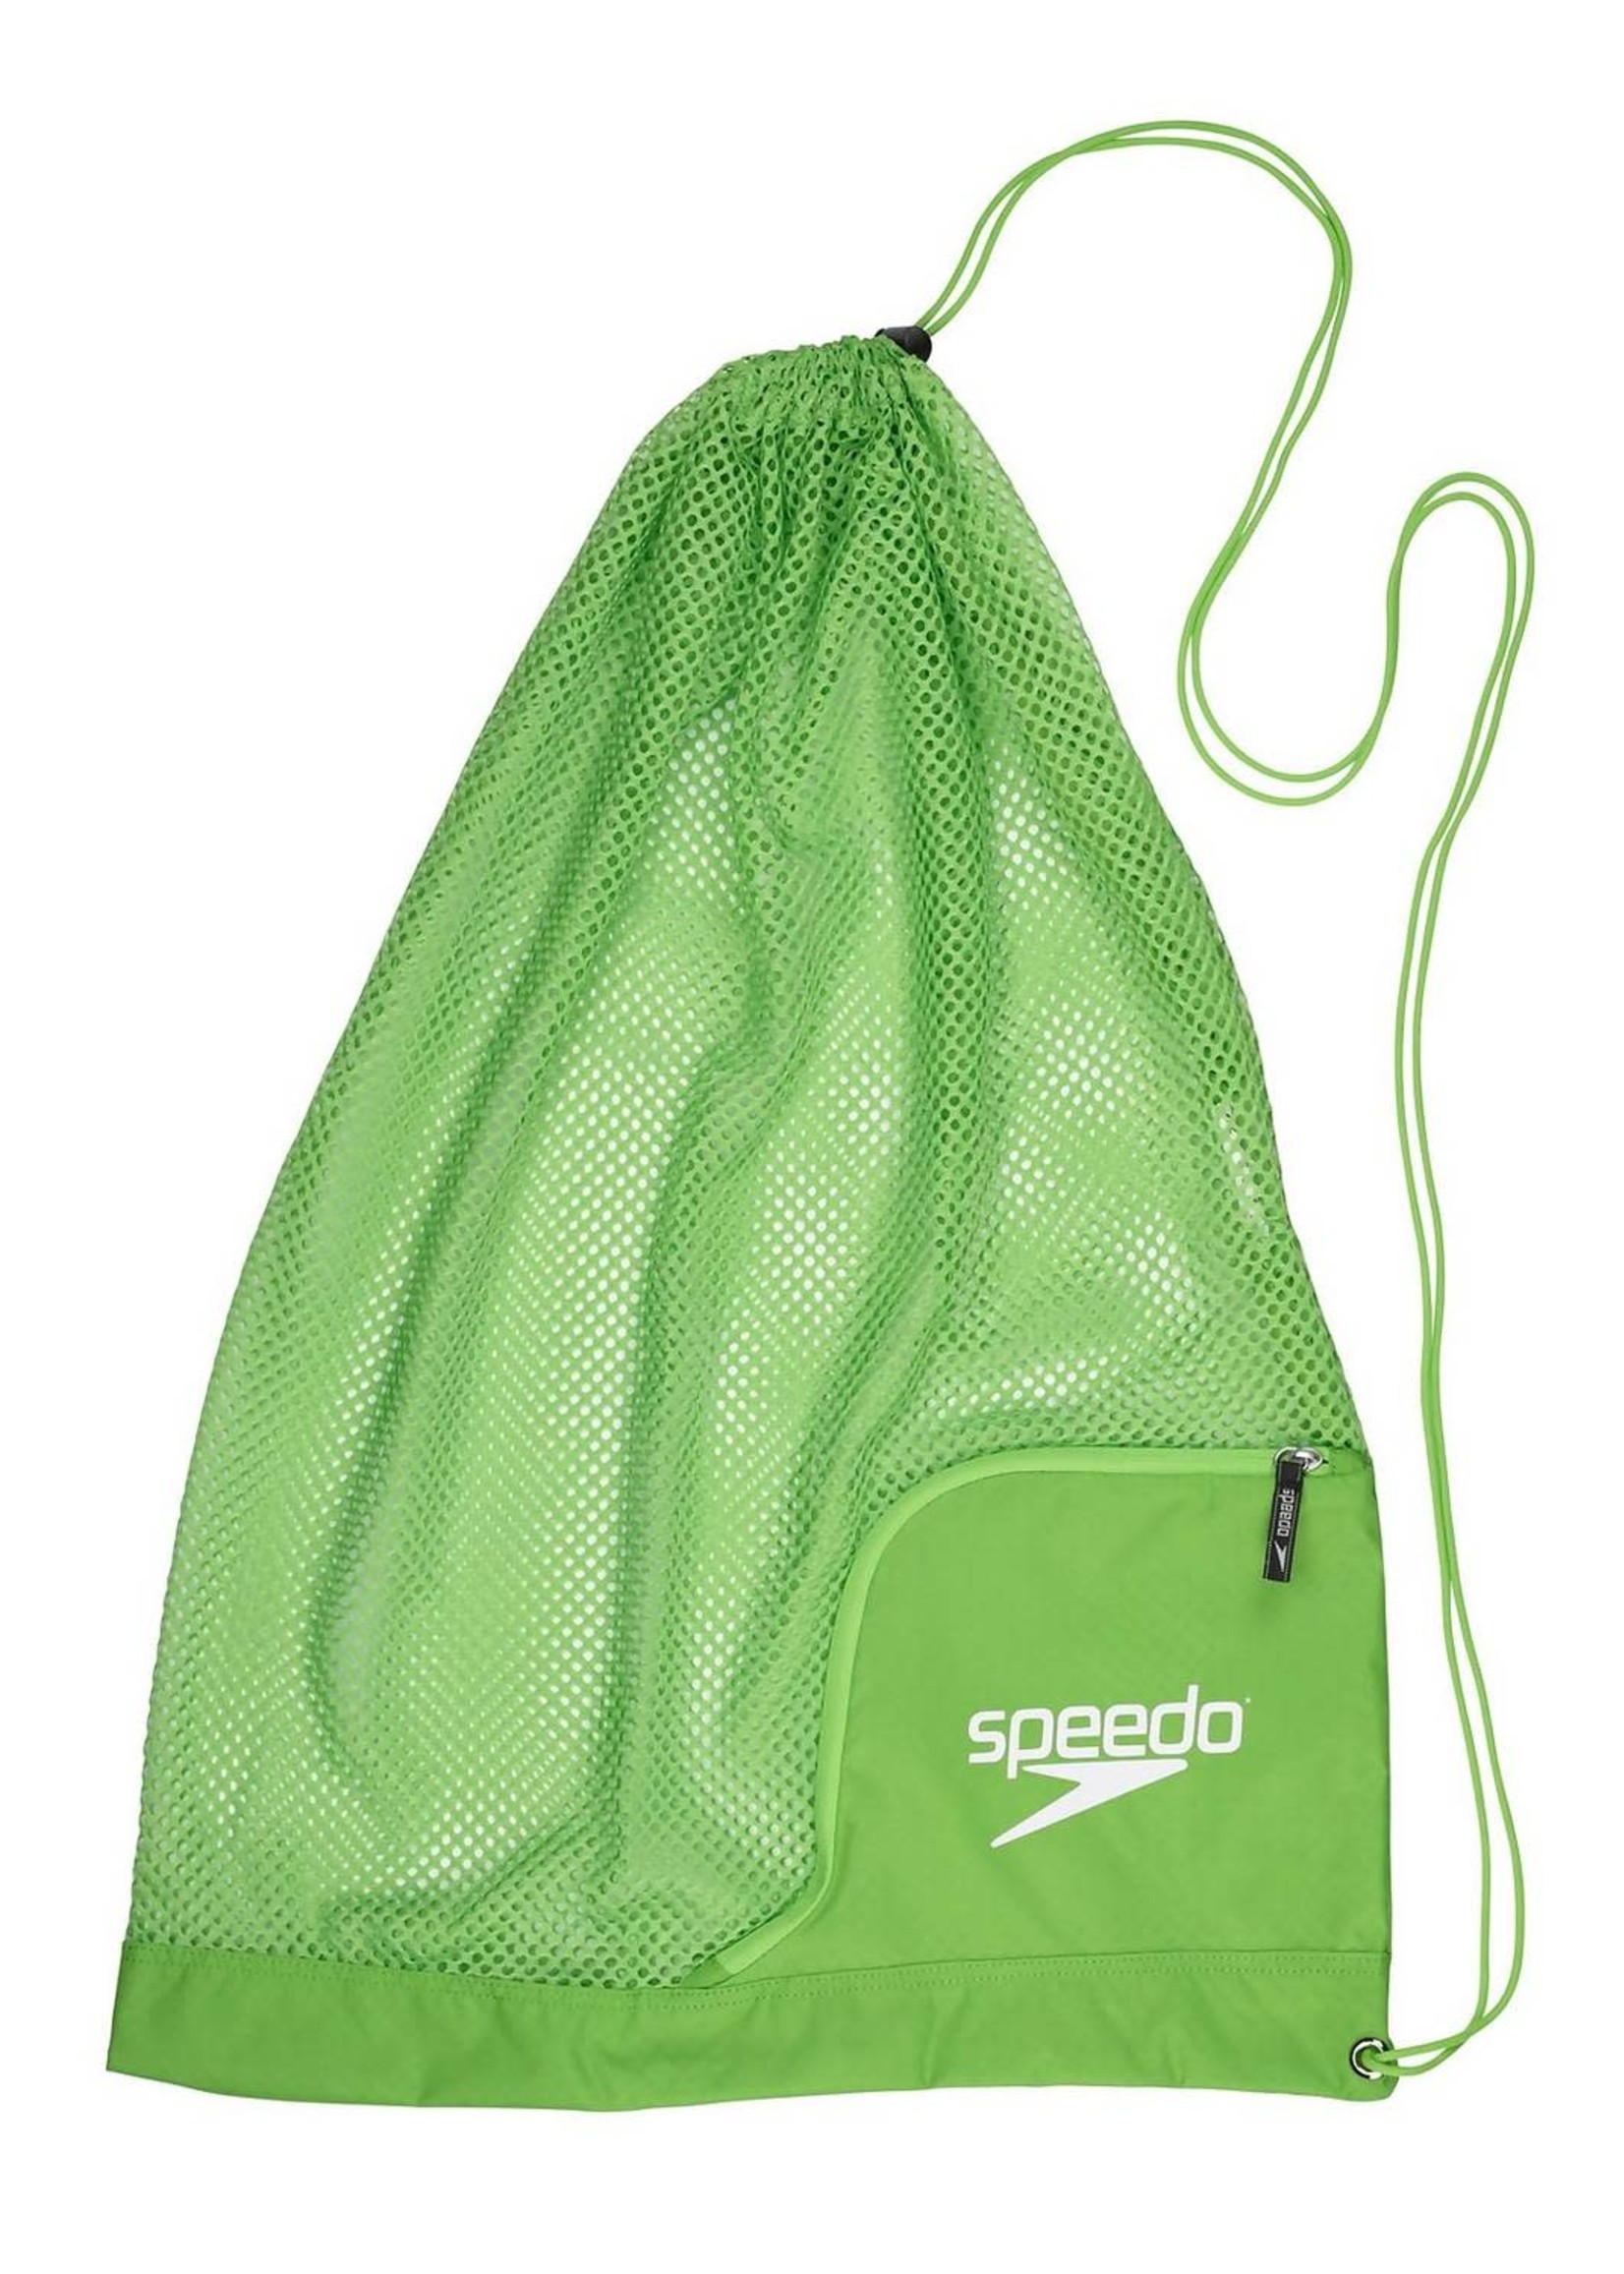 Ventilator Mesh Equipment Bag